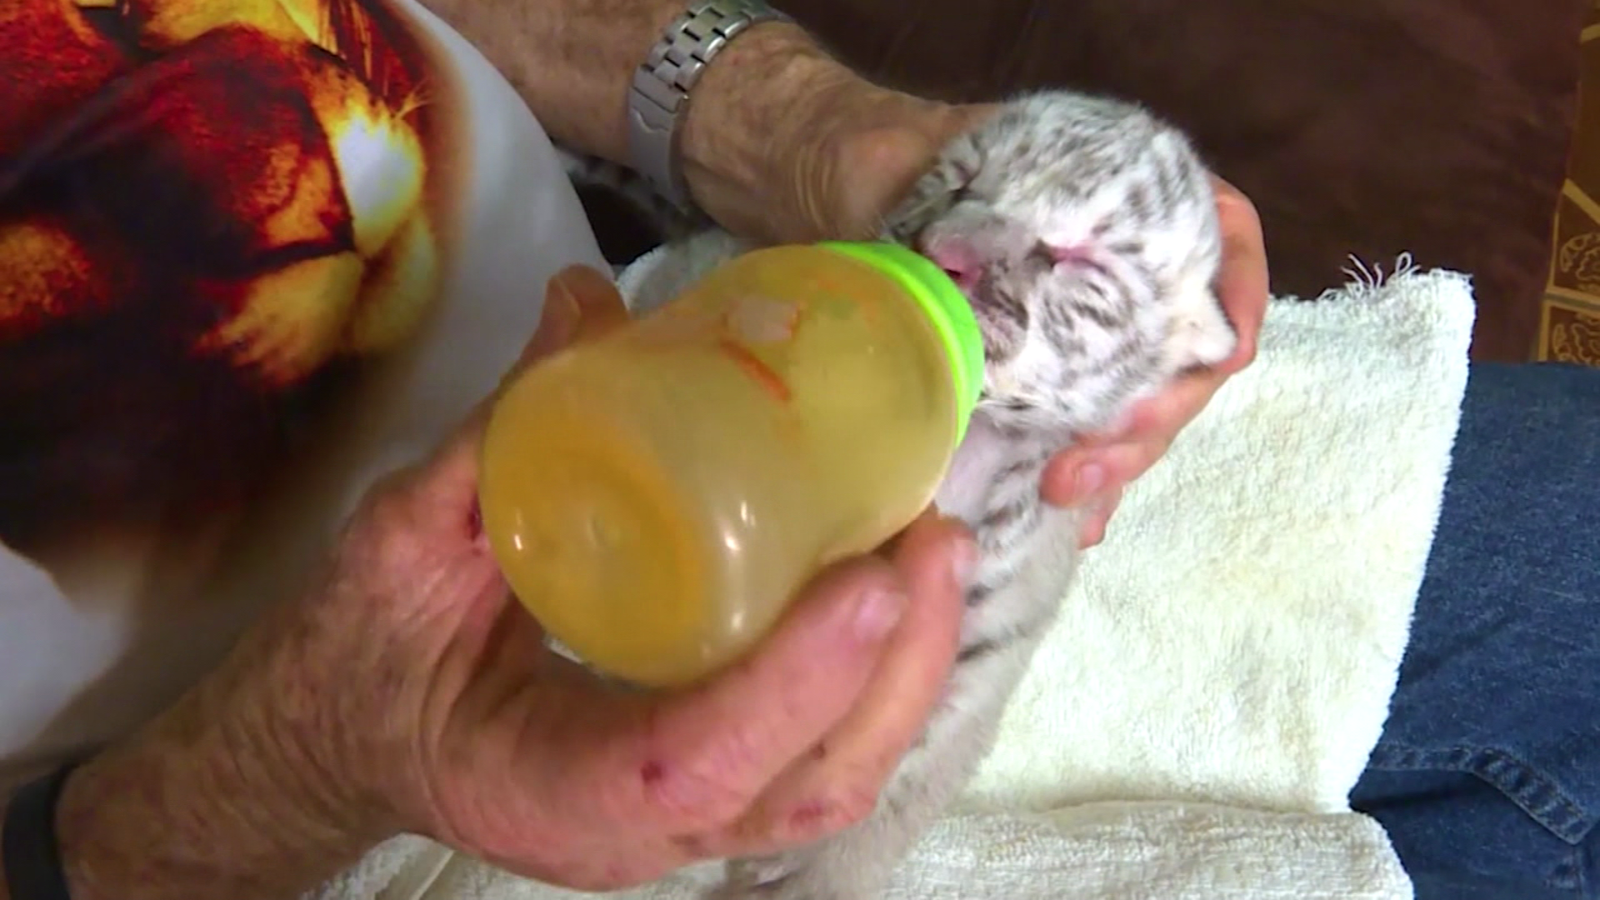 Veterinarians help little white tigers survive